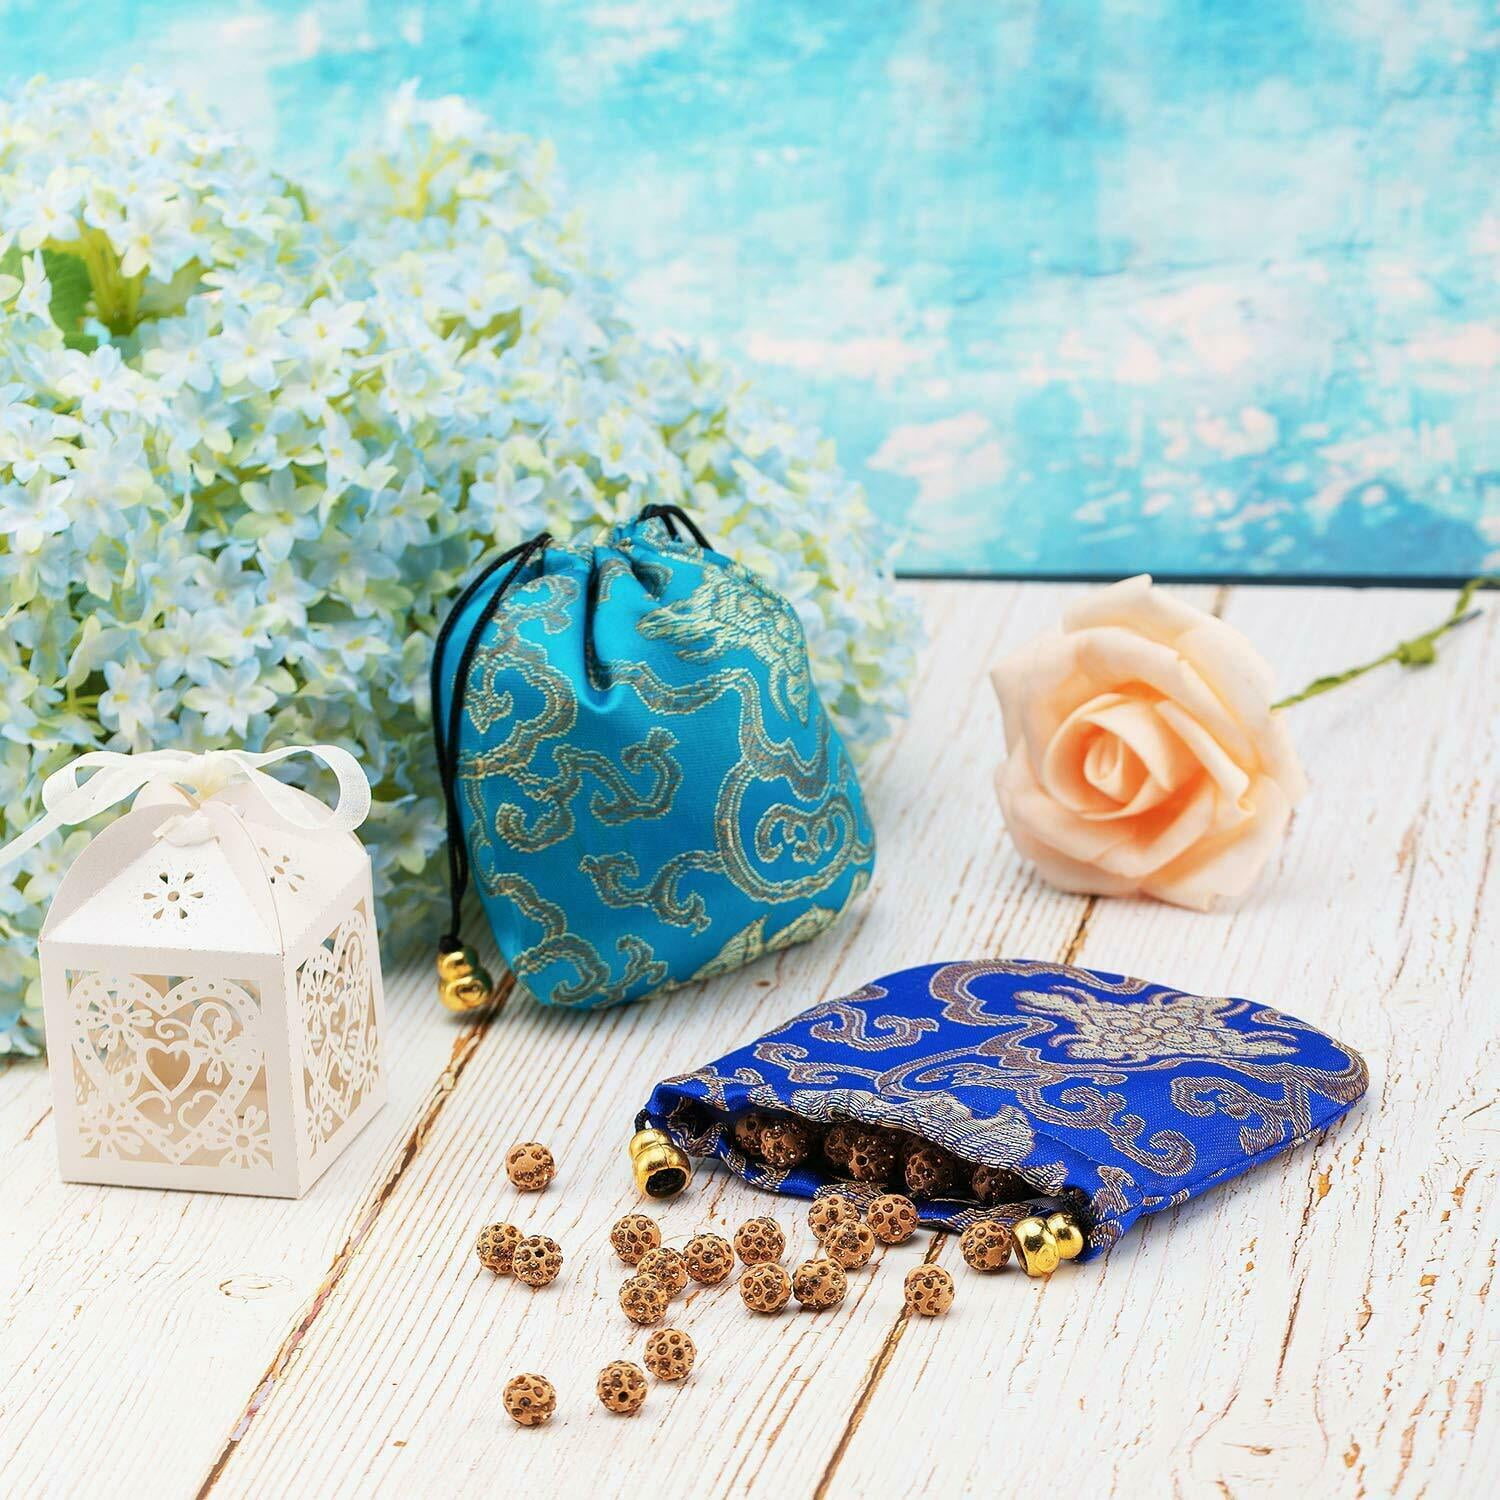 PU Leather Handbag Shape Candy Bag With Ribbon Bow Gift Box Weddiing Party  Favor | eBay